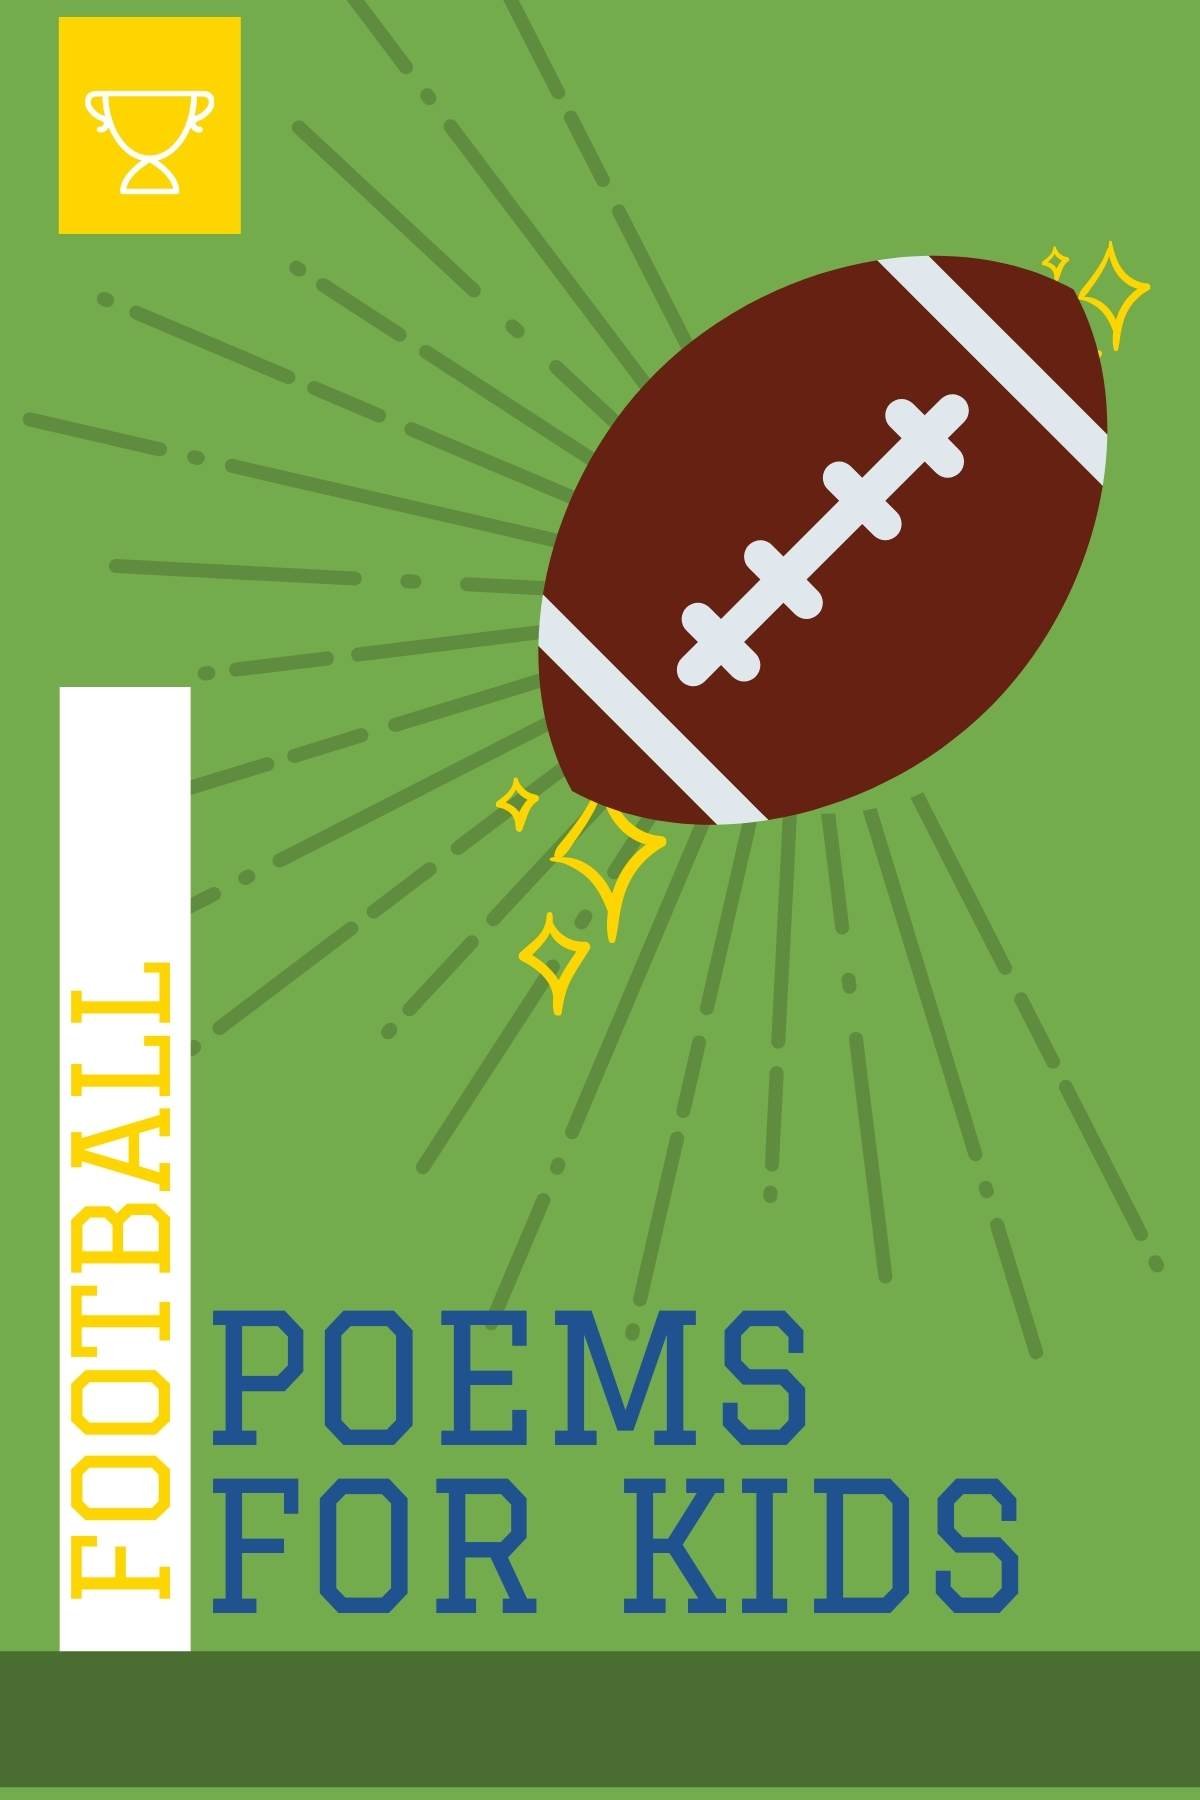 football poems for kids